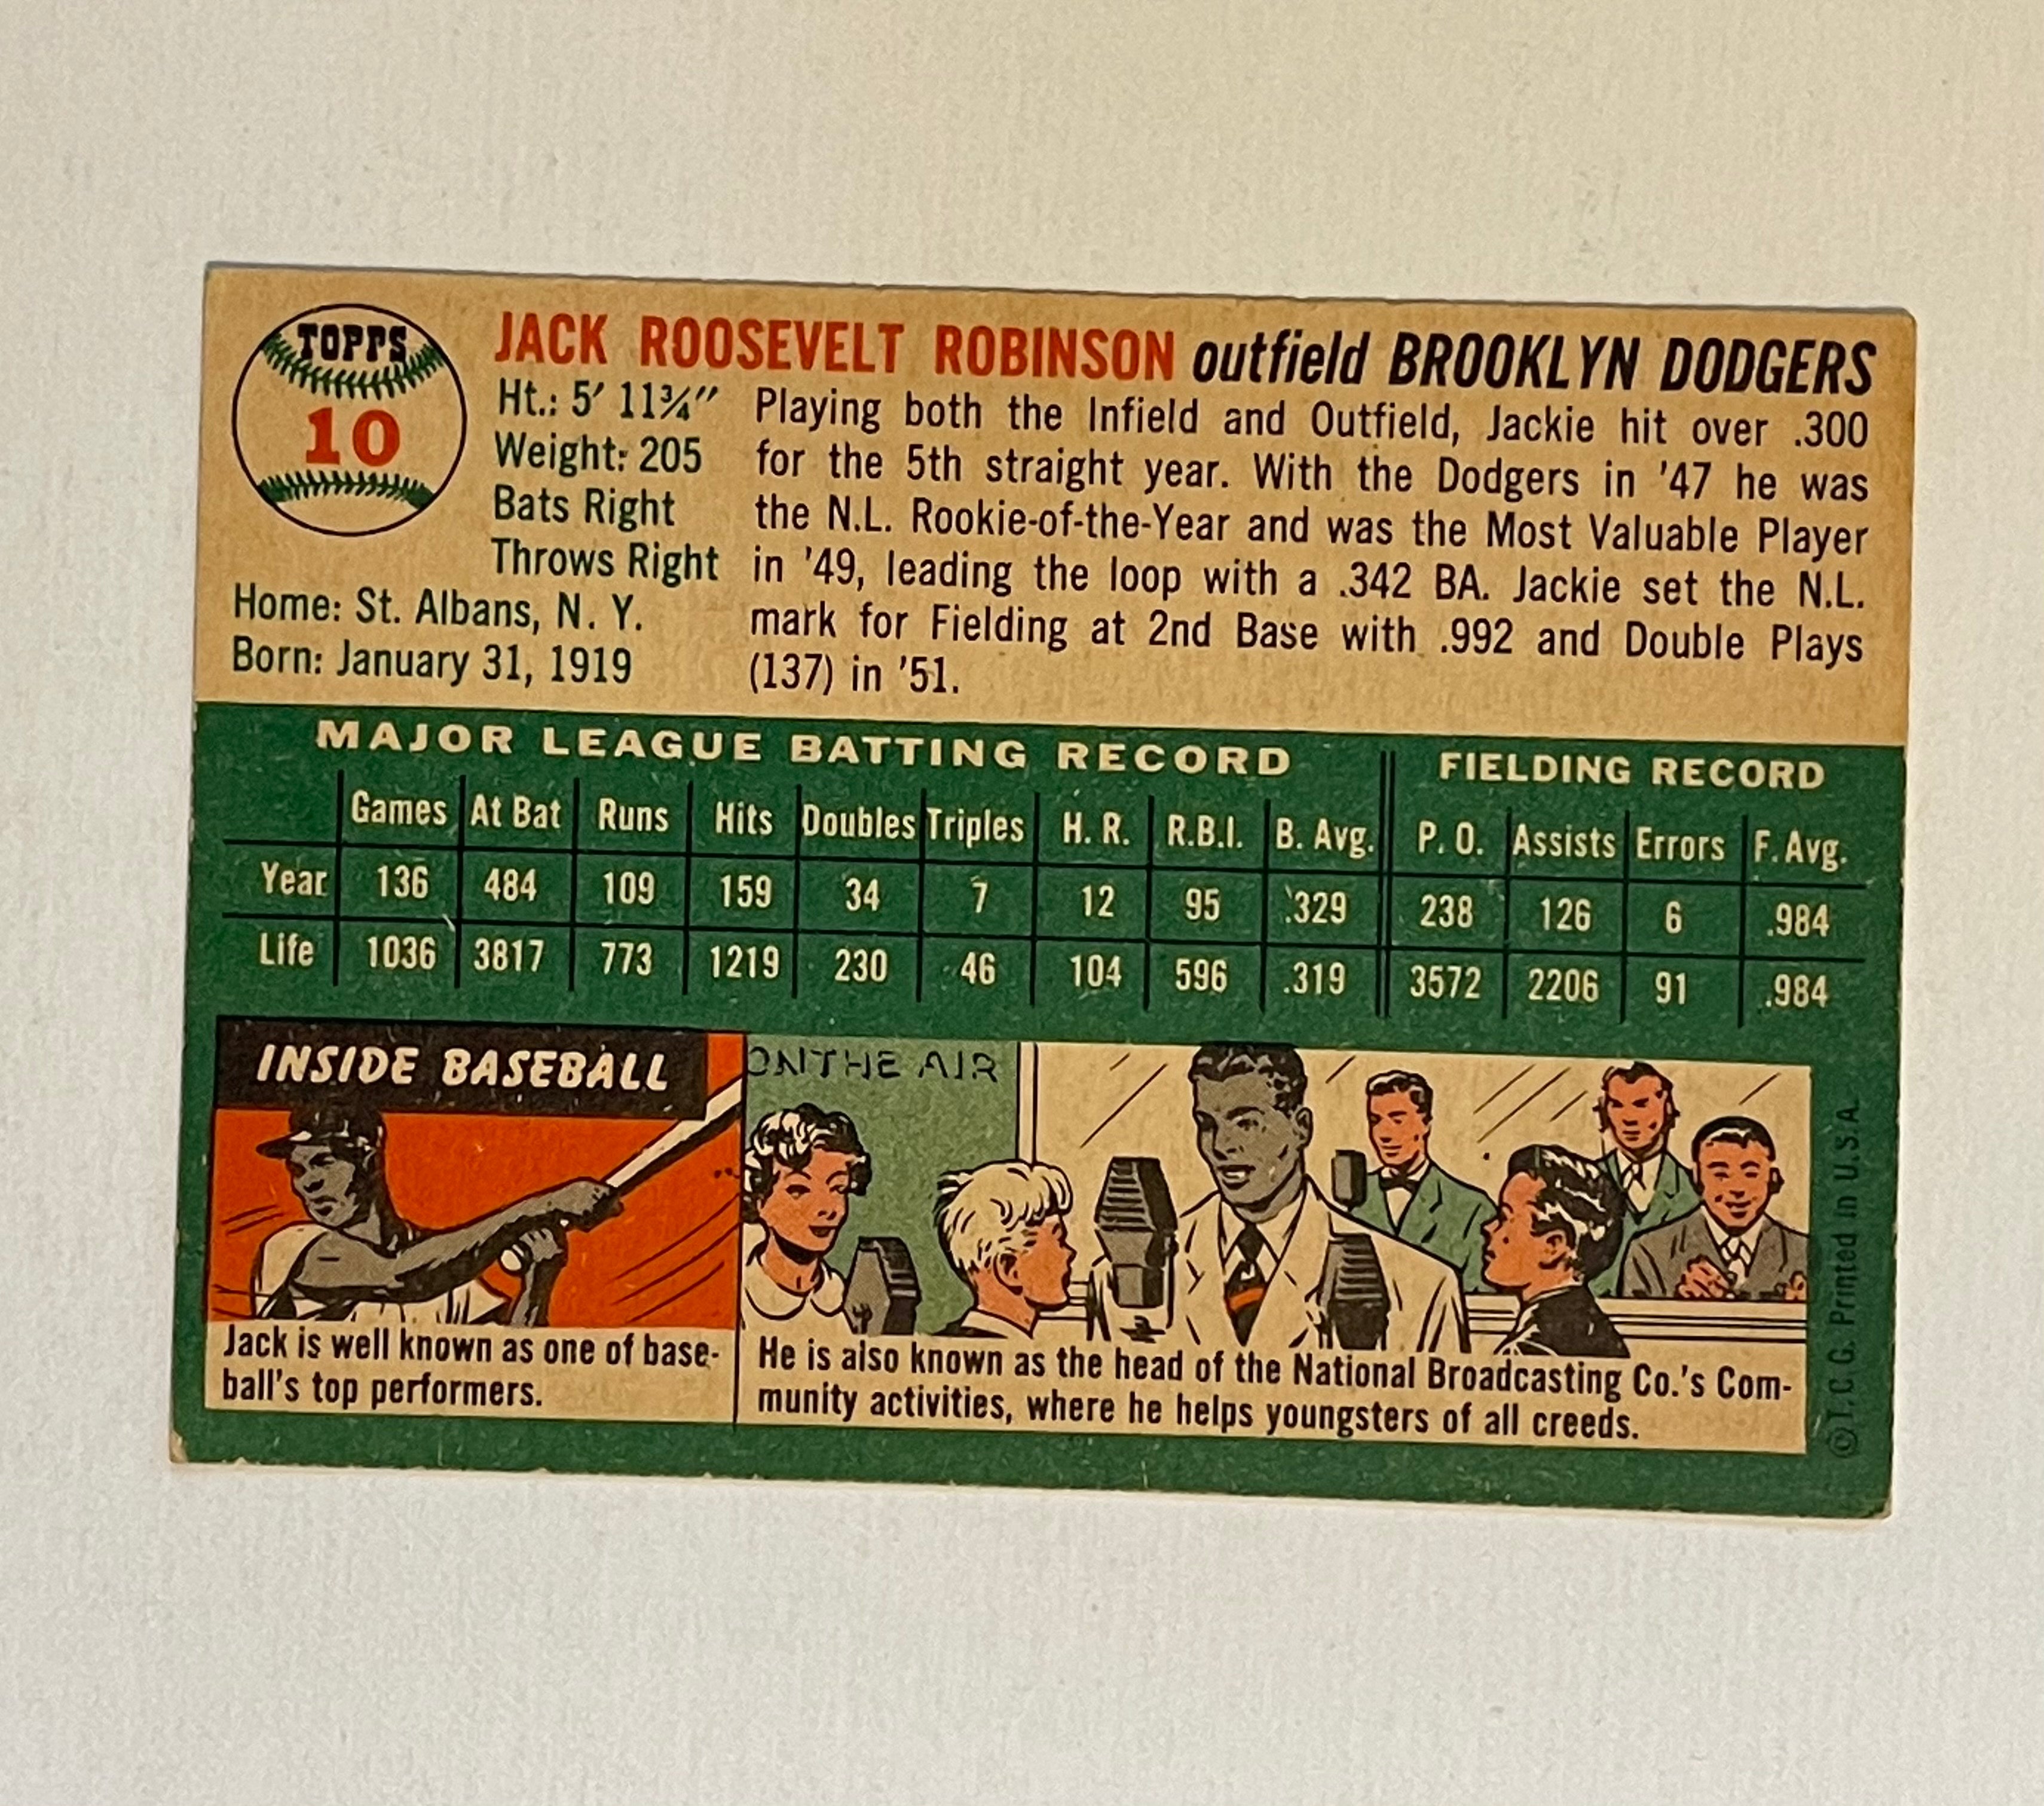 Jackie Robinson Topps ex condition baseball card 1954